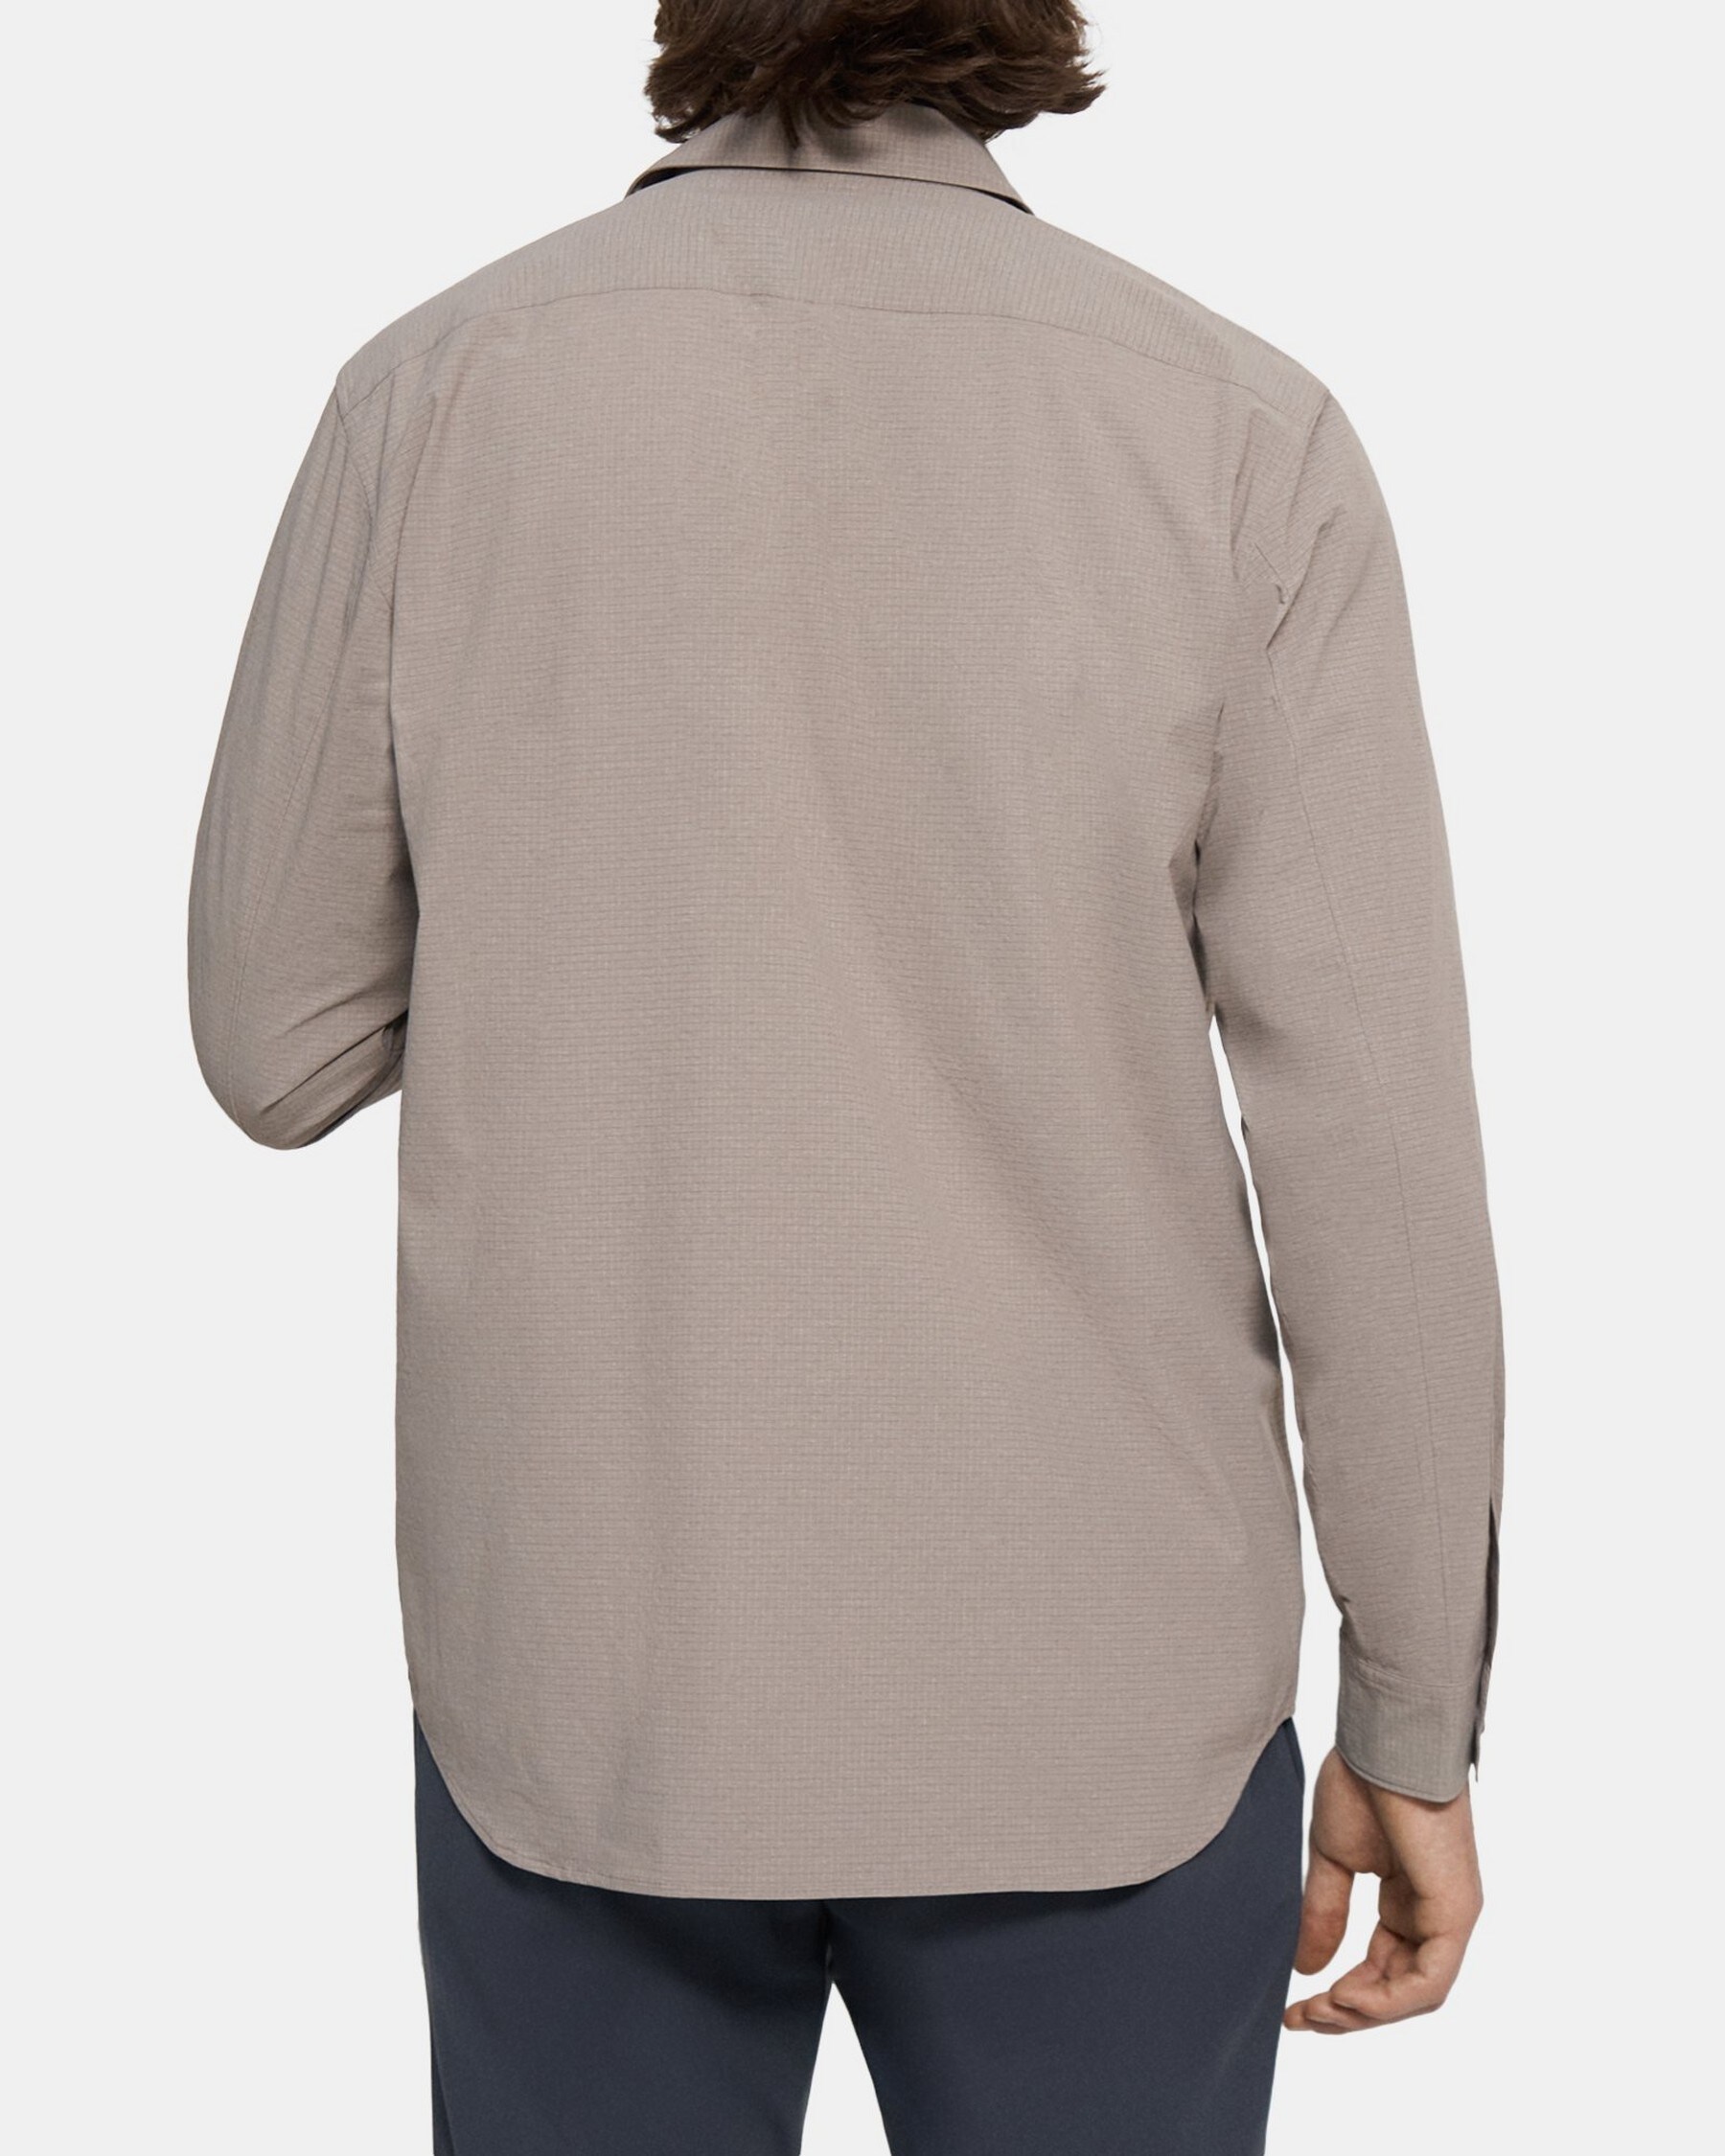 Long-Sleeve Shirt in Tech Nylon